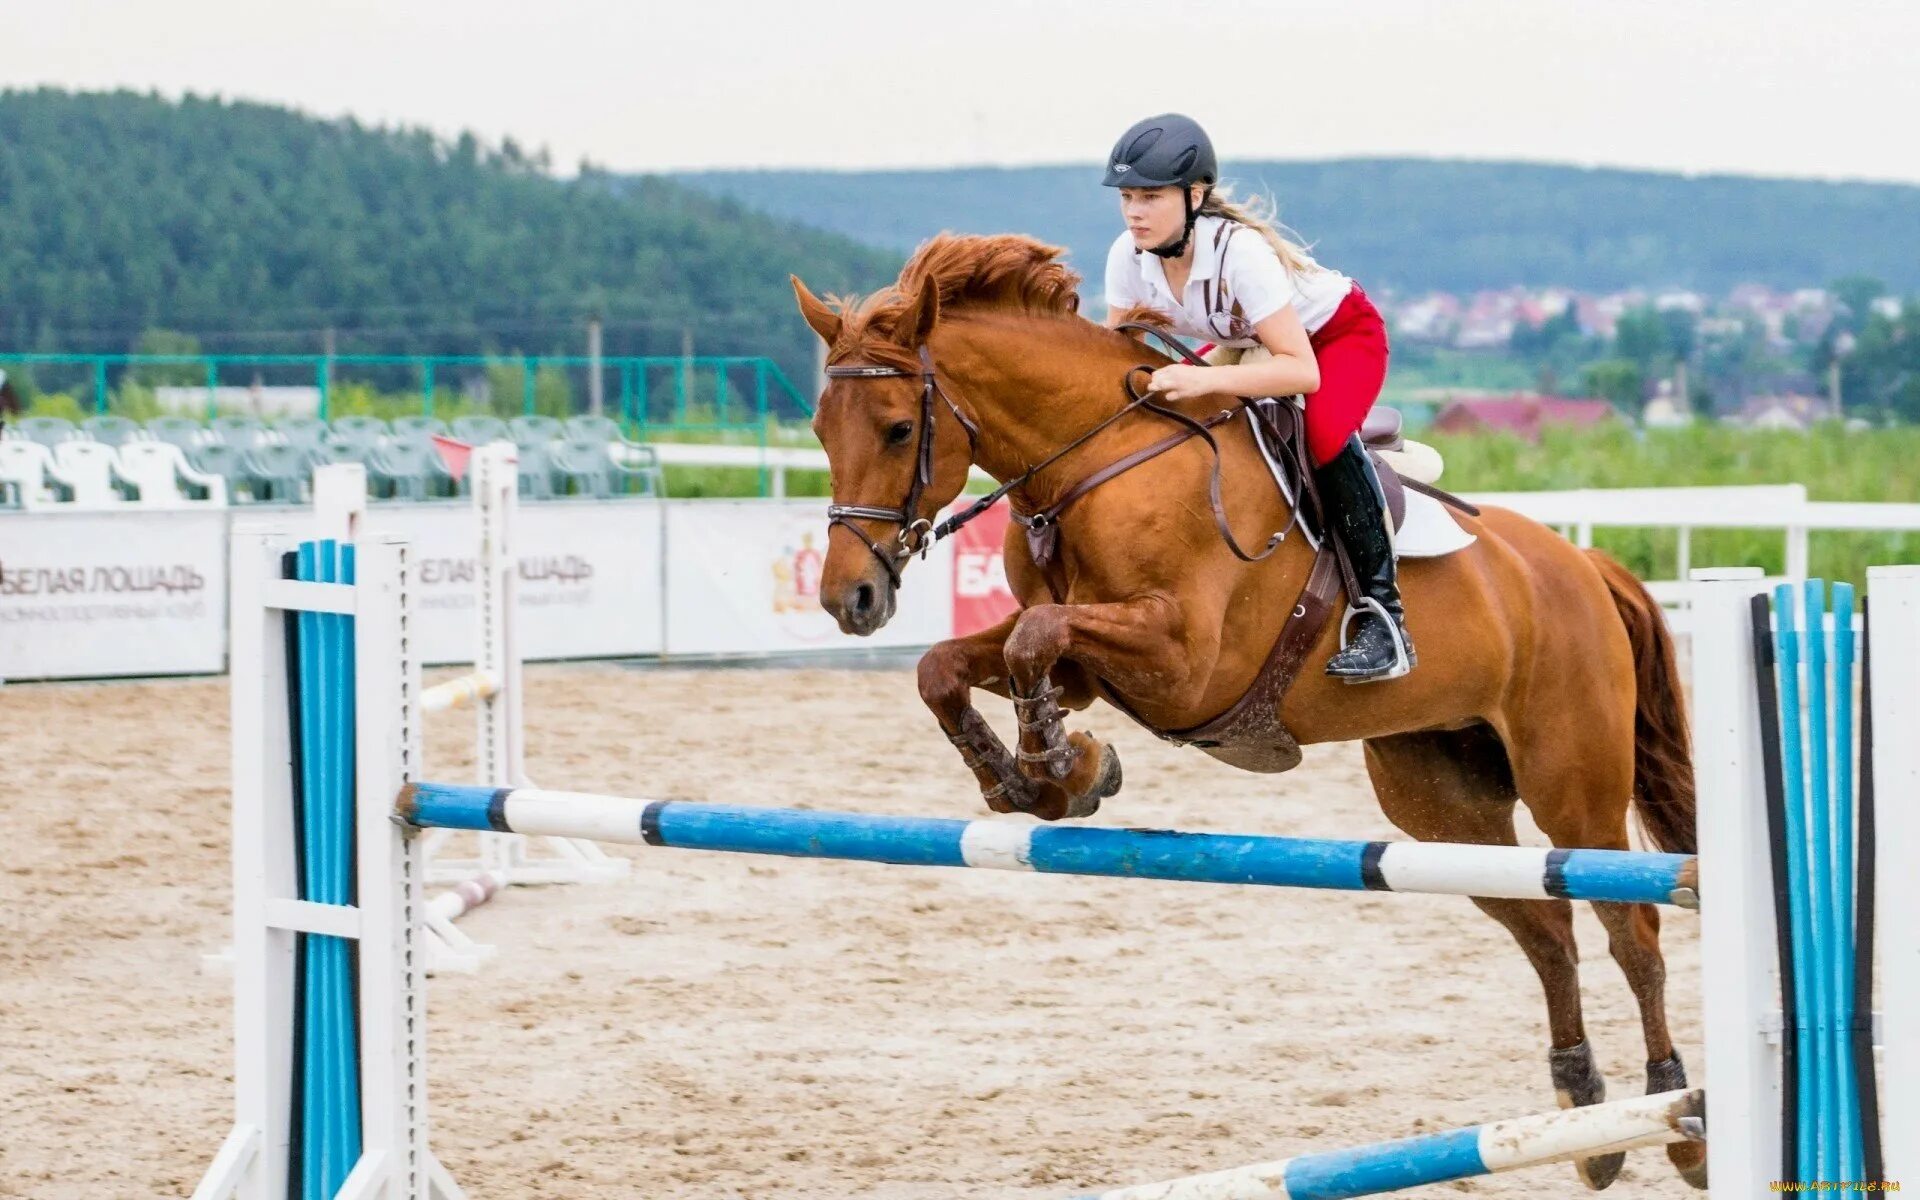 Horse sport. Спорт Хорс райдинг. Скачки на лошадях. Лошади спорт. Прыжки на лошади через барьер.